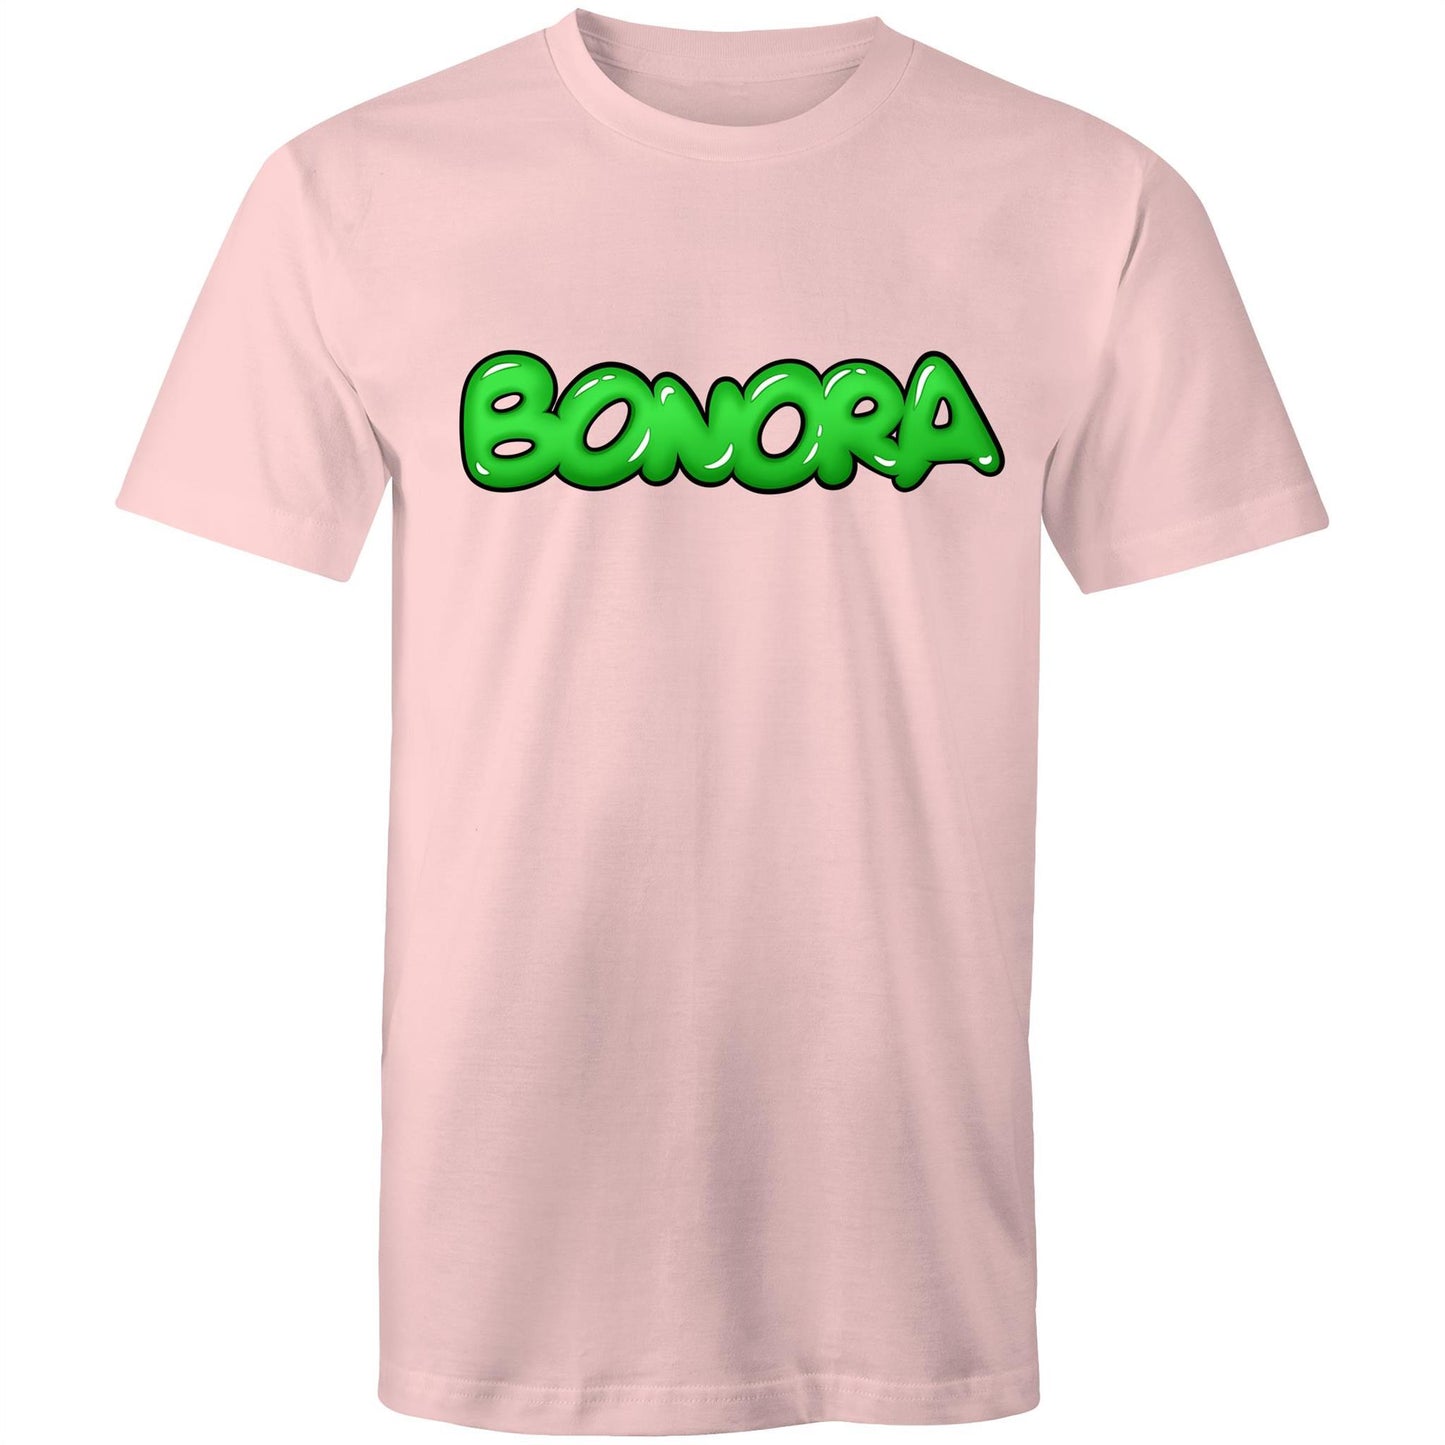 Bubble Bonora Comfy Tee